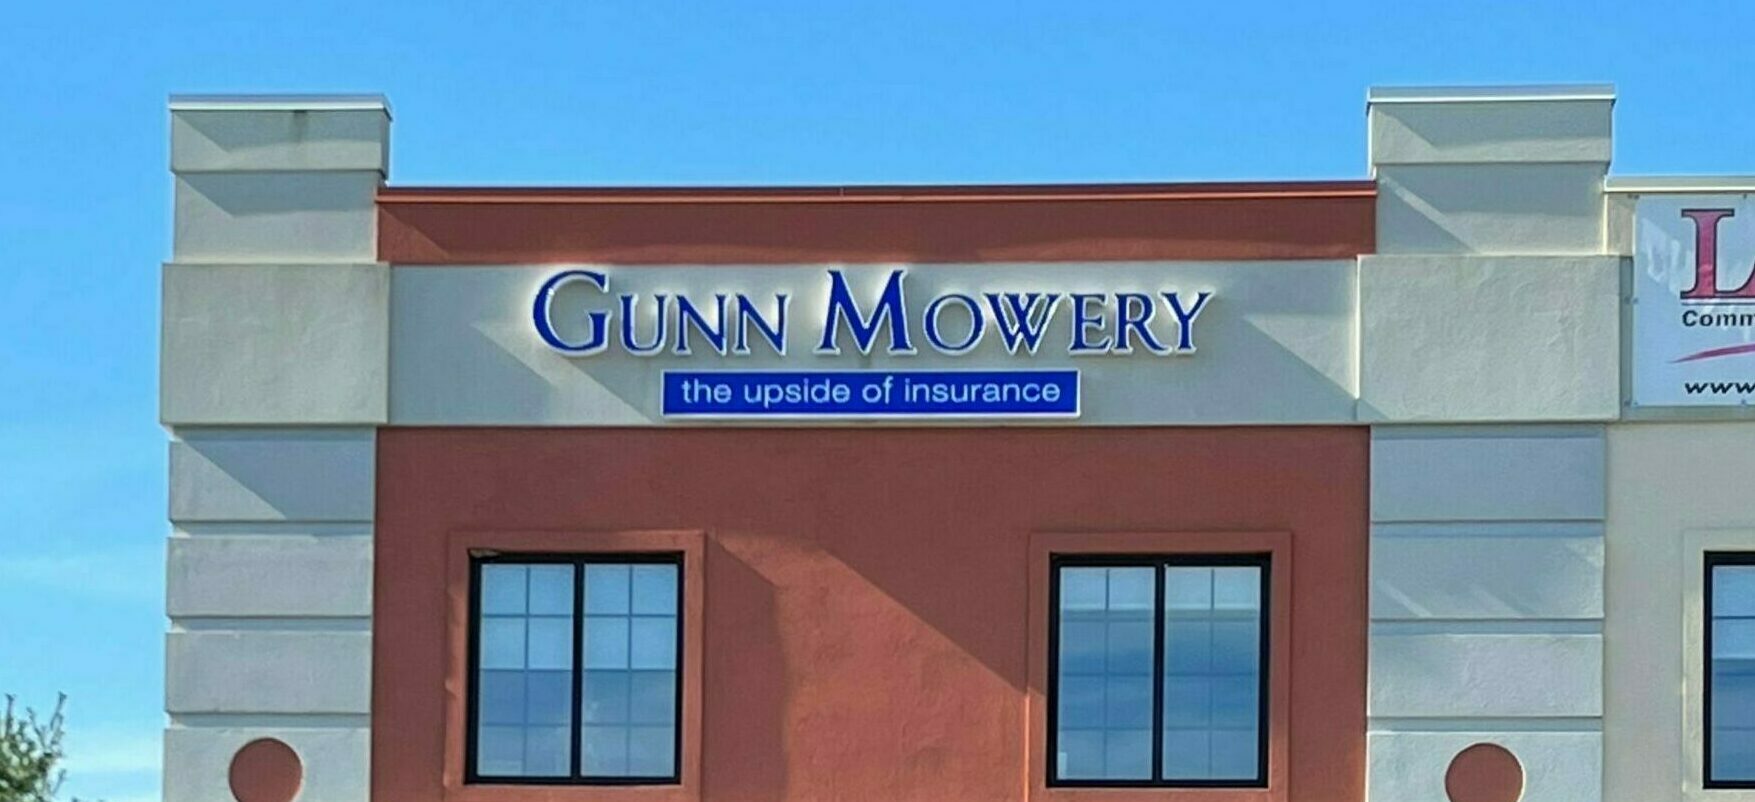 Gunn Mowery Lemoyne office location